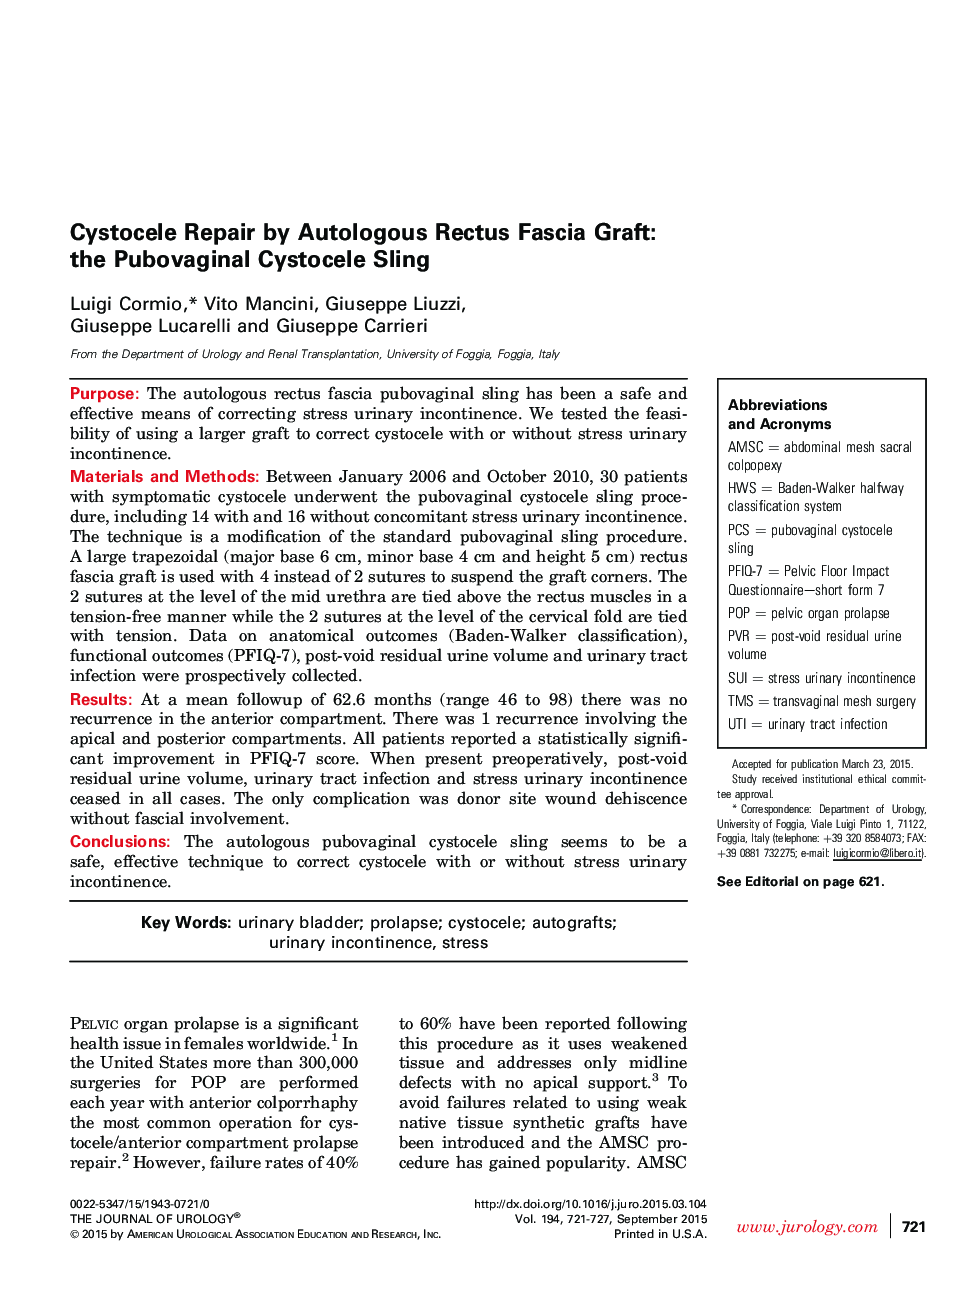 Cystocele Repair by Autologous Rectus Fascia Graft: the Pubovaginal Cystocele Sling 